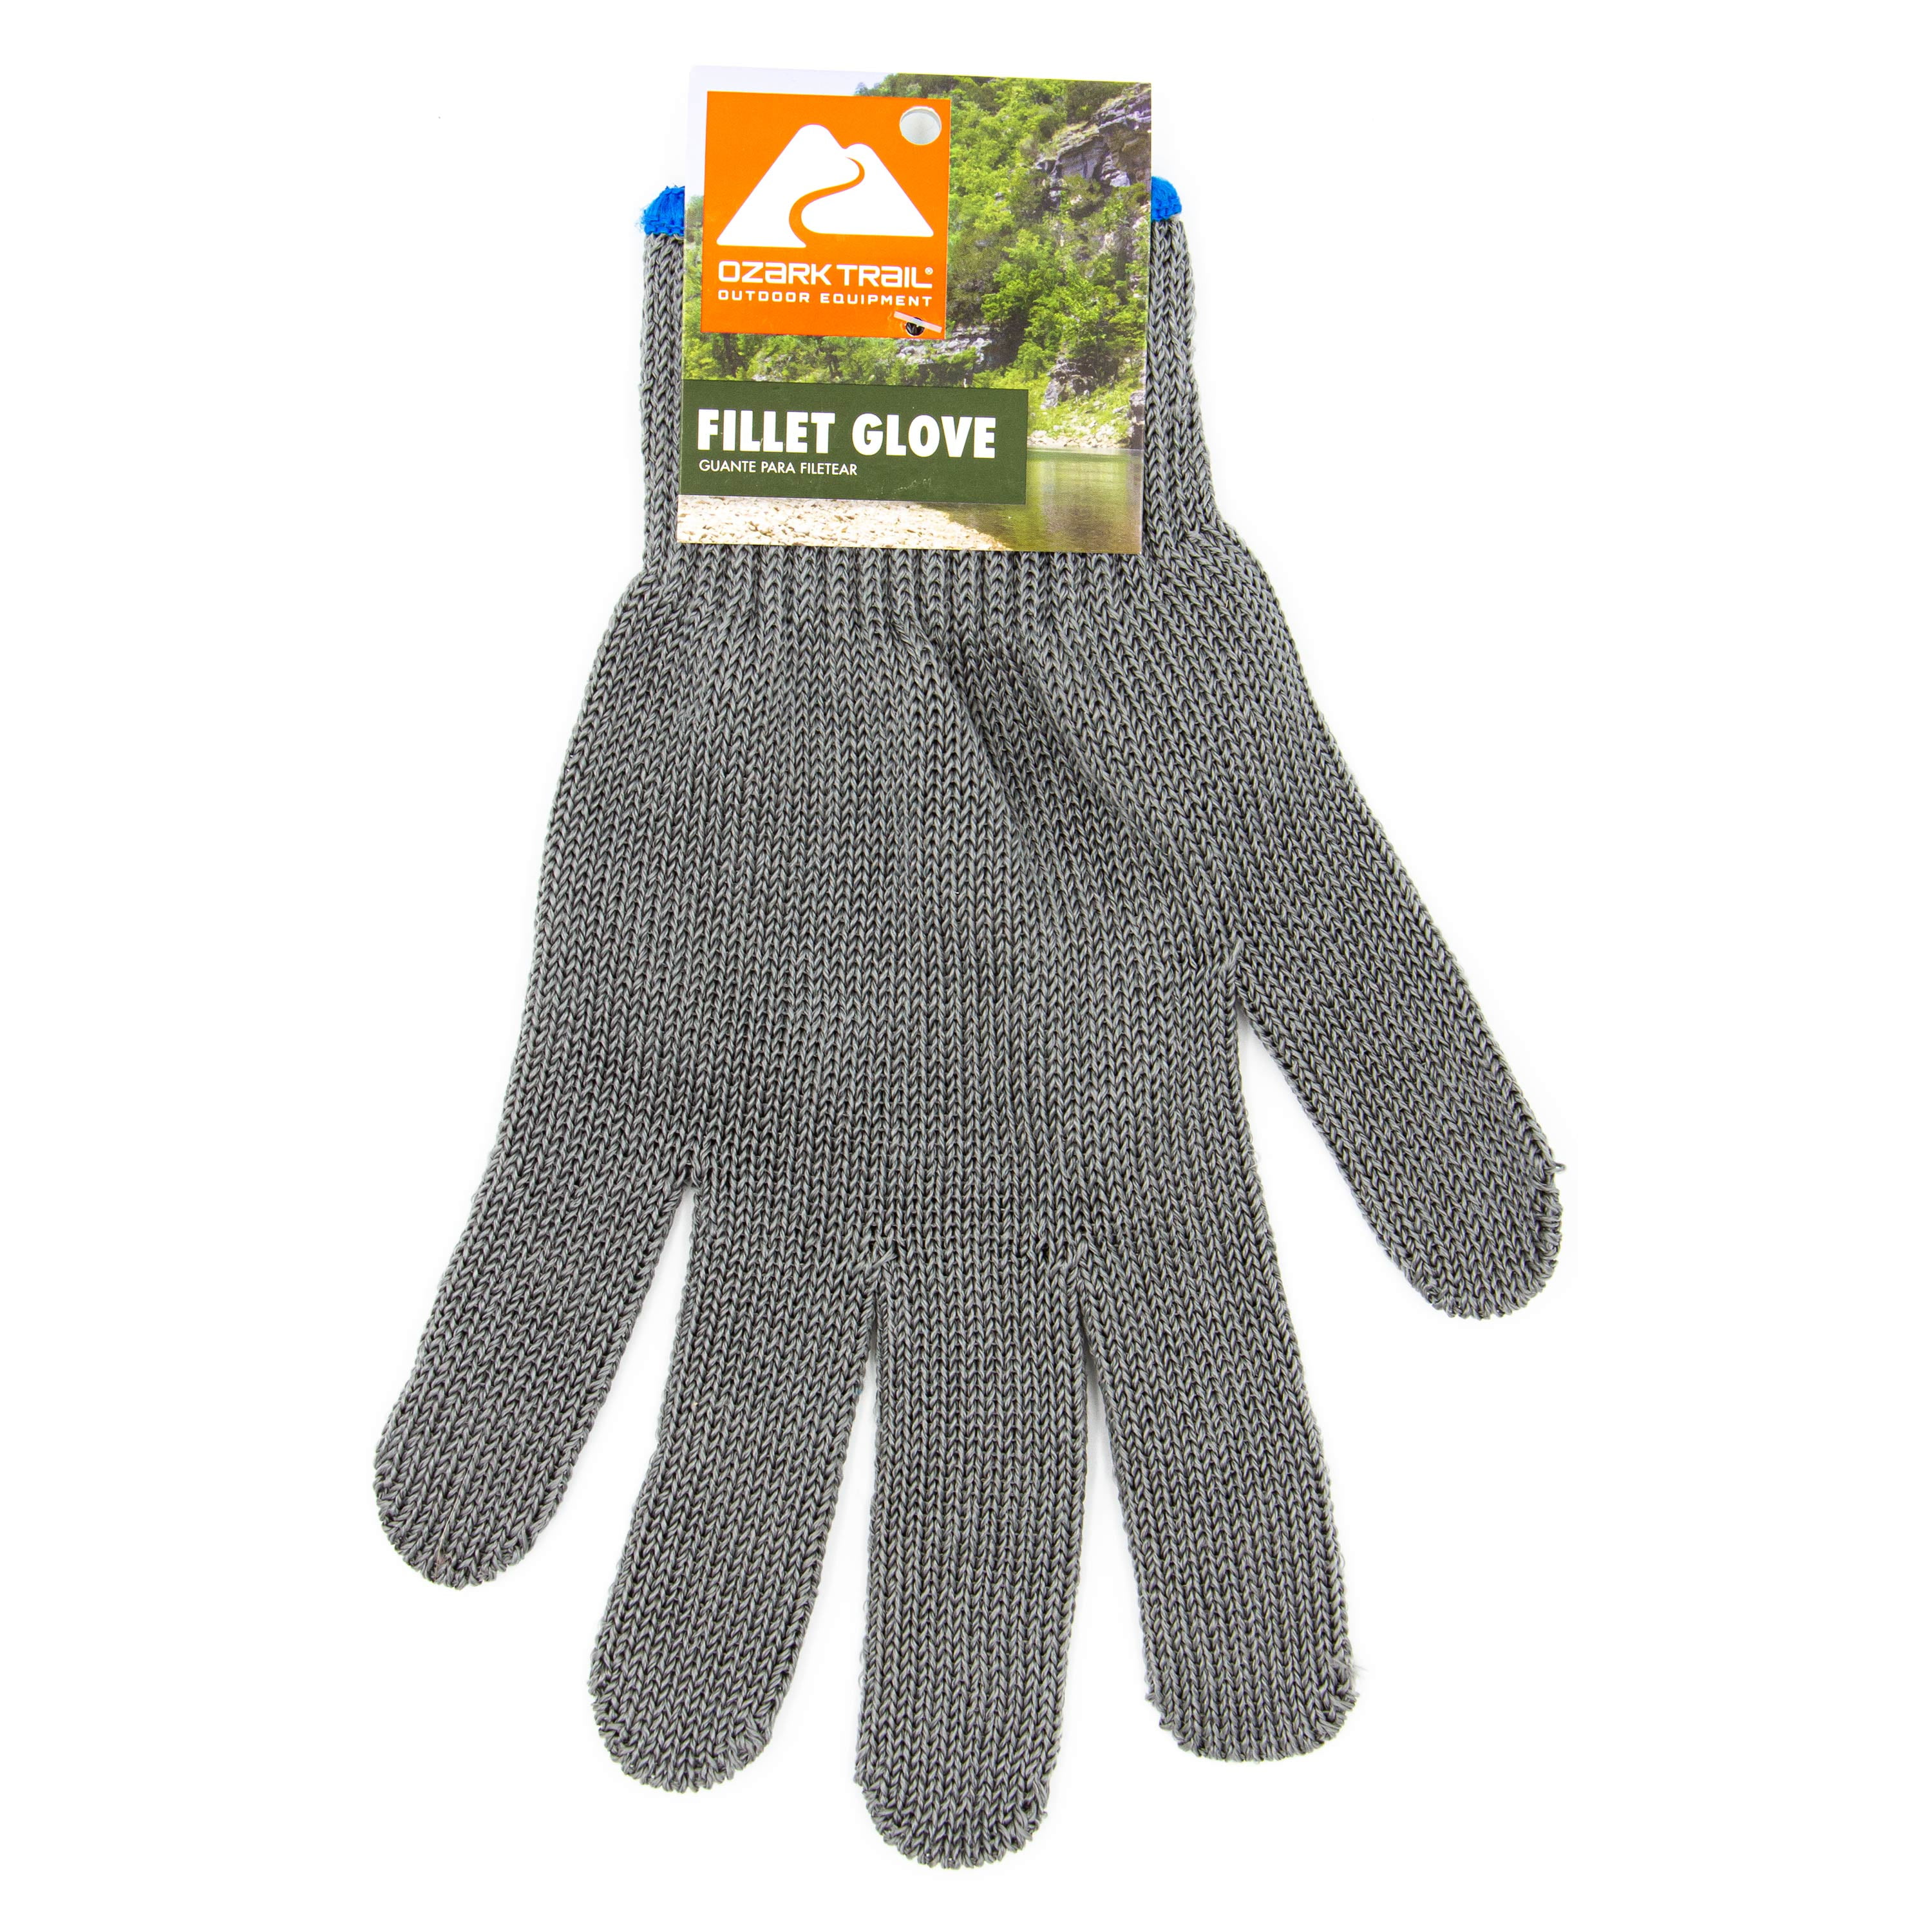 Ozark Trail Adult Cut-Resistant Fish Fillet Glove $3.05 + Free Shipping w/ Walmart+ or $35+